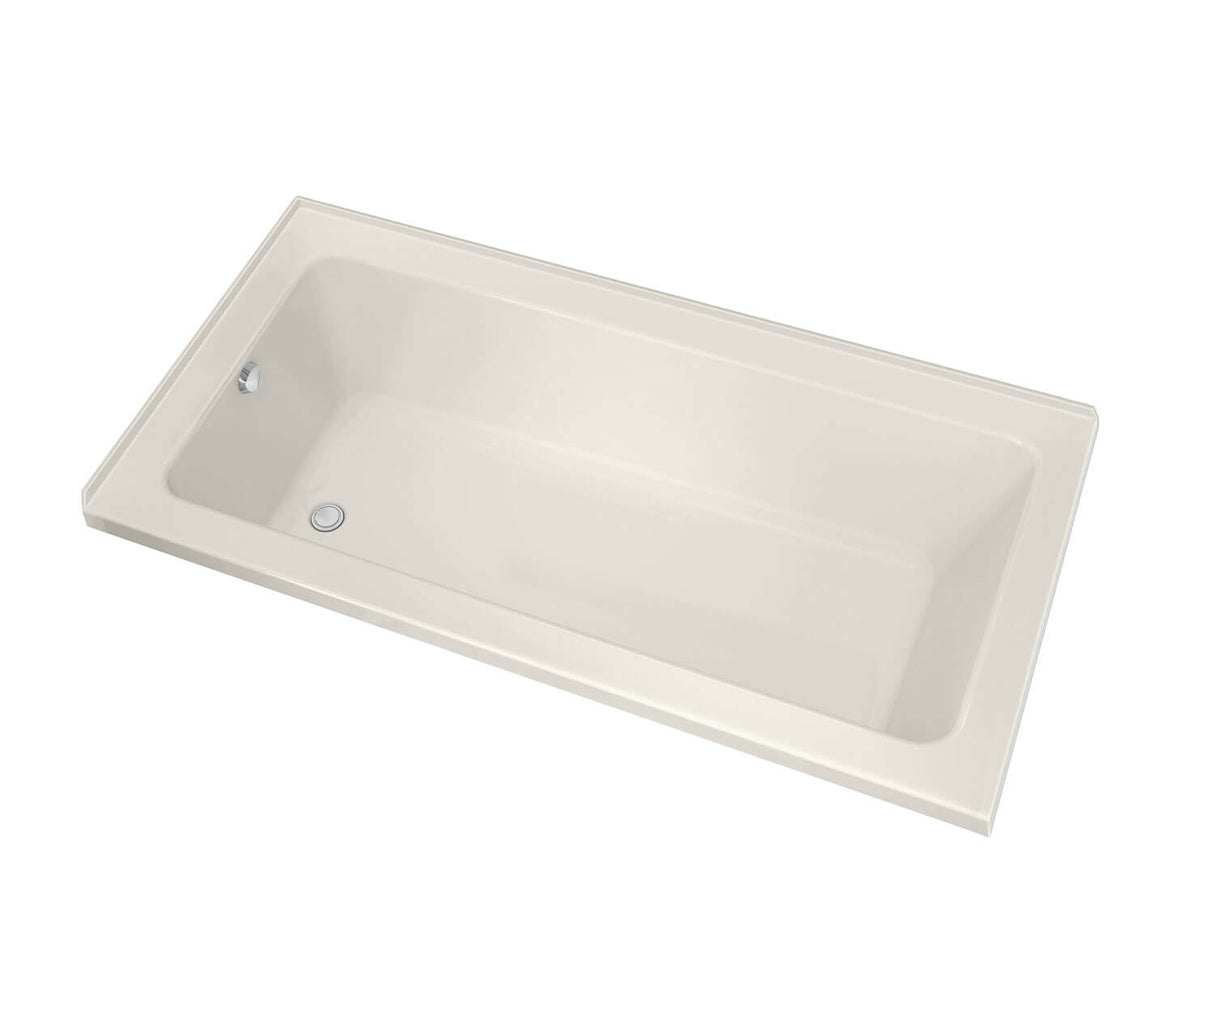 MAAX 106211-L-000-007 Pose 7236 IF Acrylic Corner Left Left-Hand Drain Bathtub in Biscuit